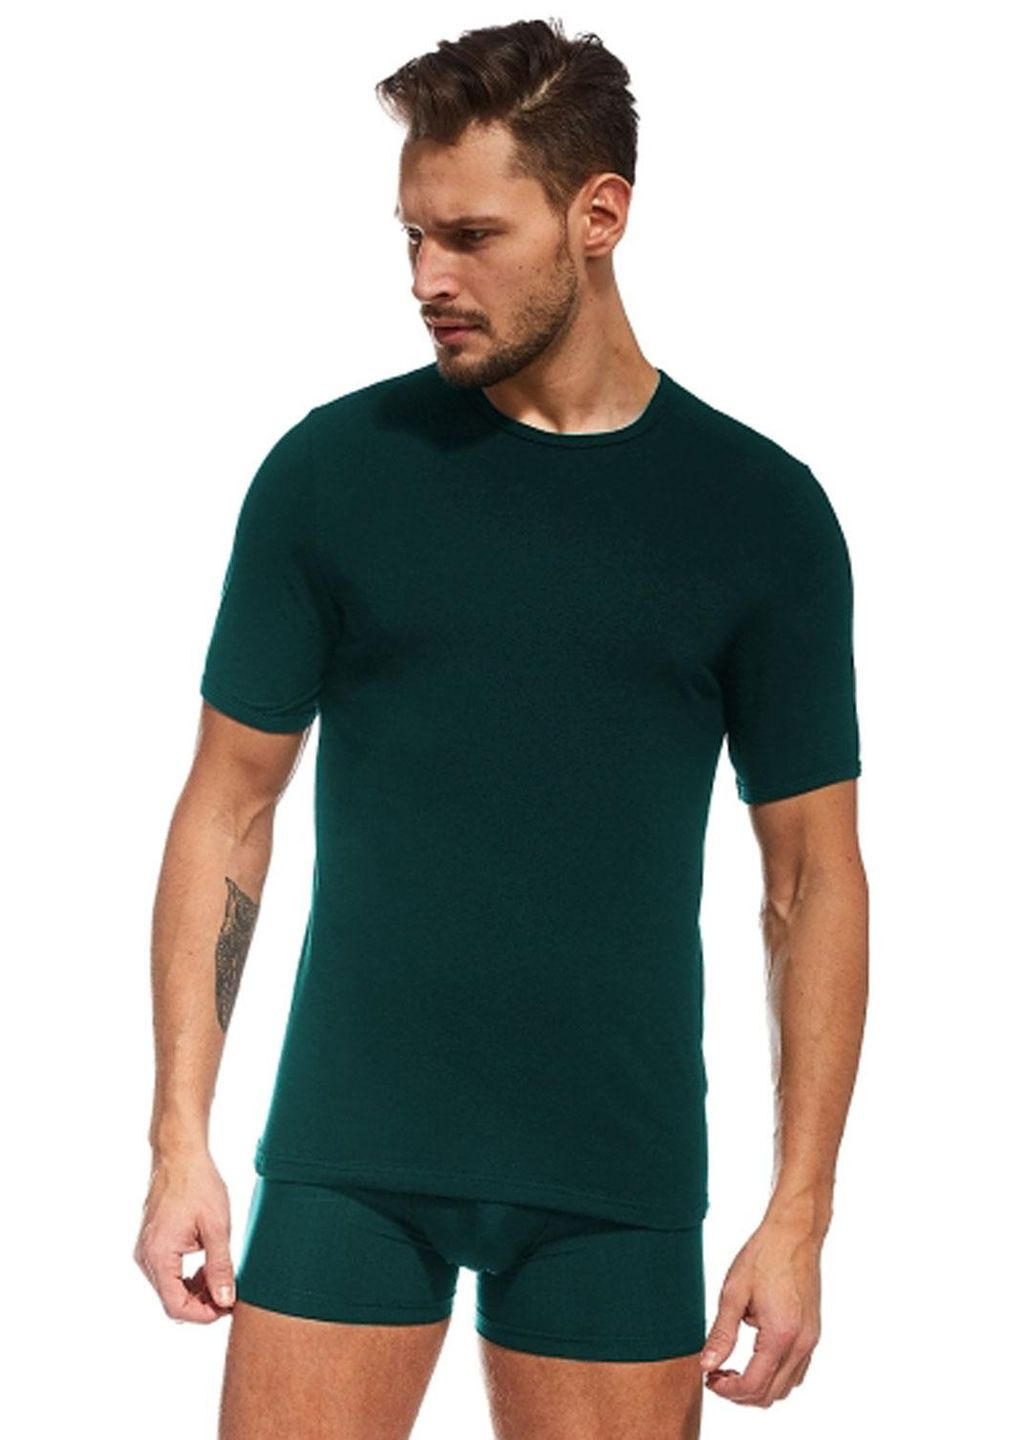 Зелена футболка чоловіча new high emotion 532 з коротким рукавом Cornette